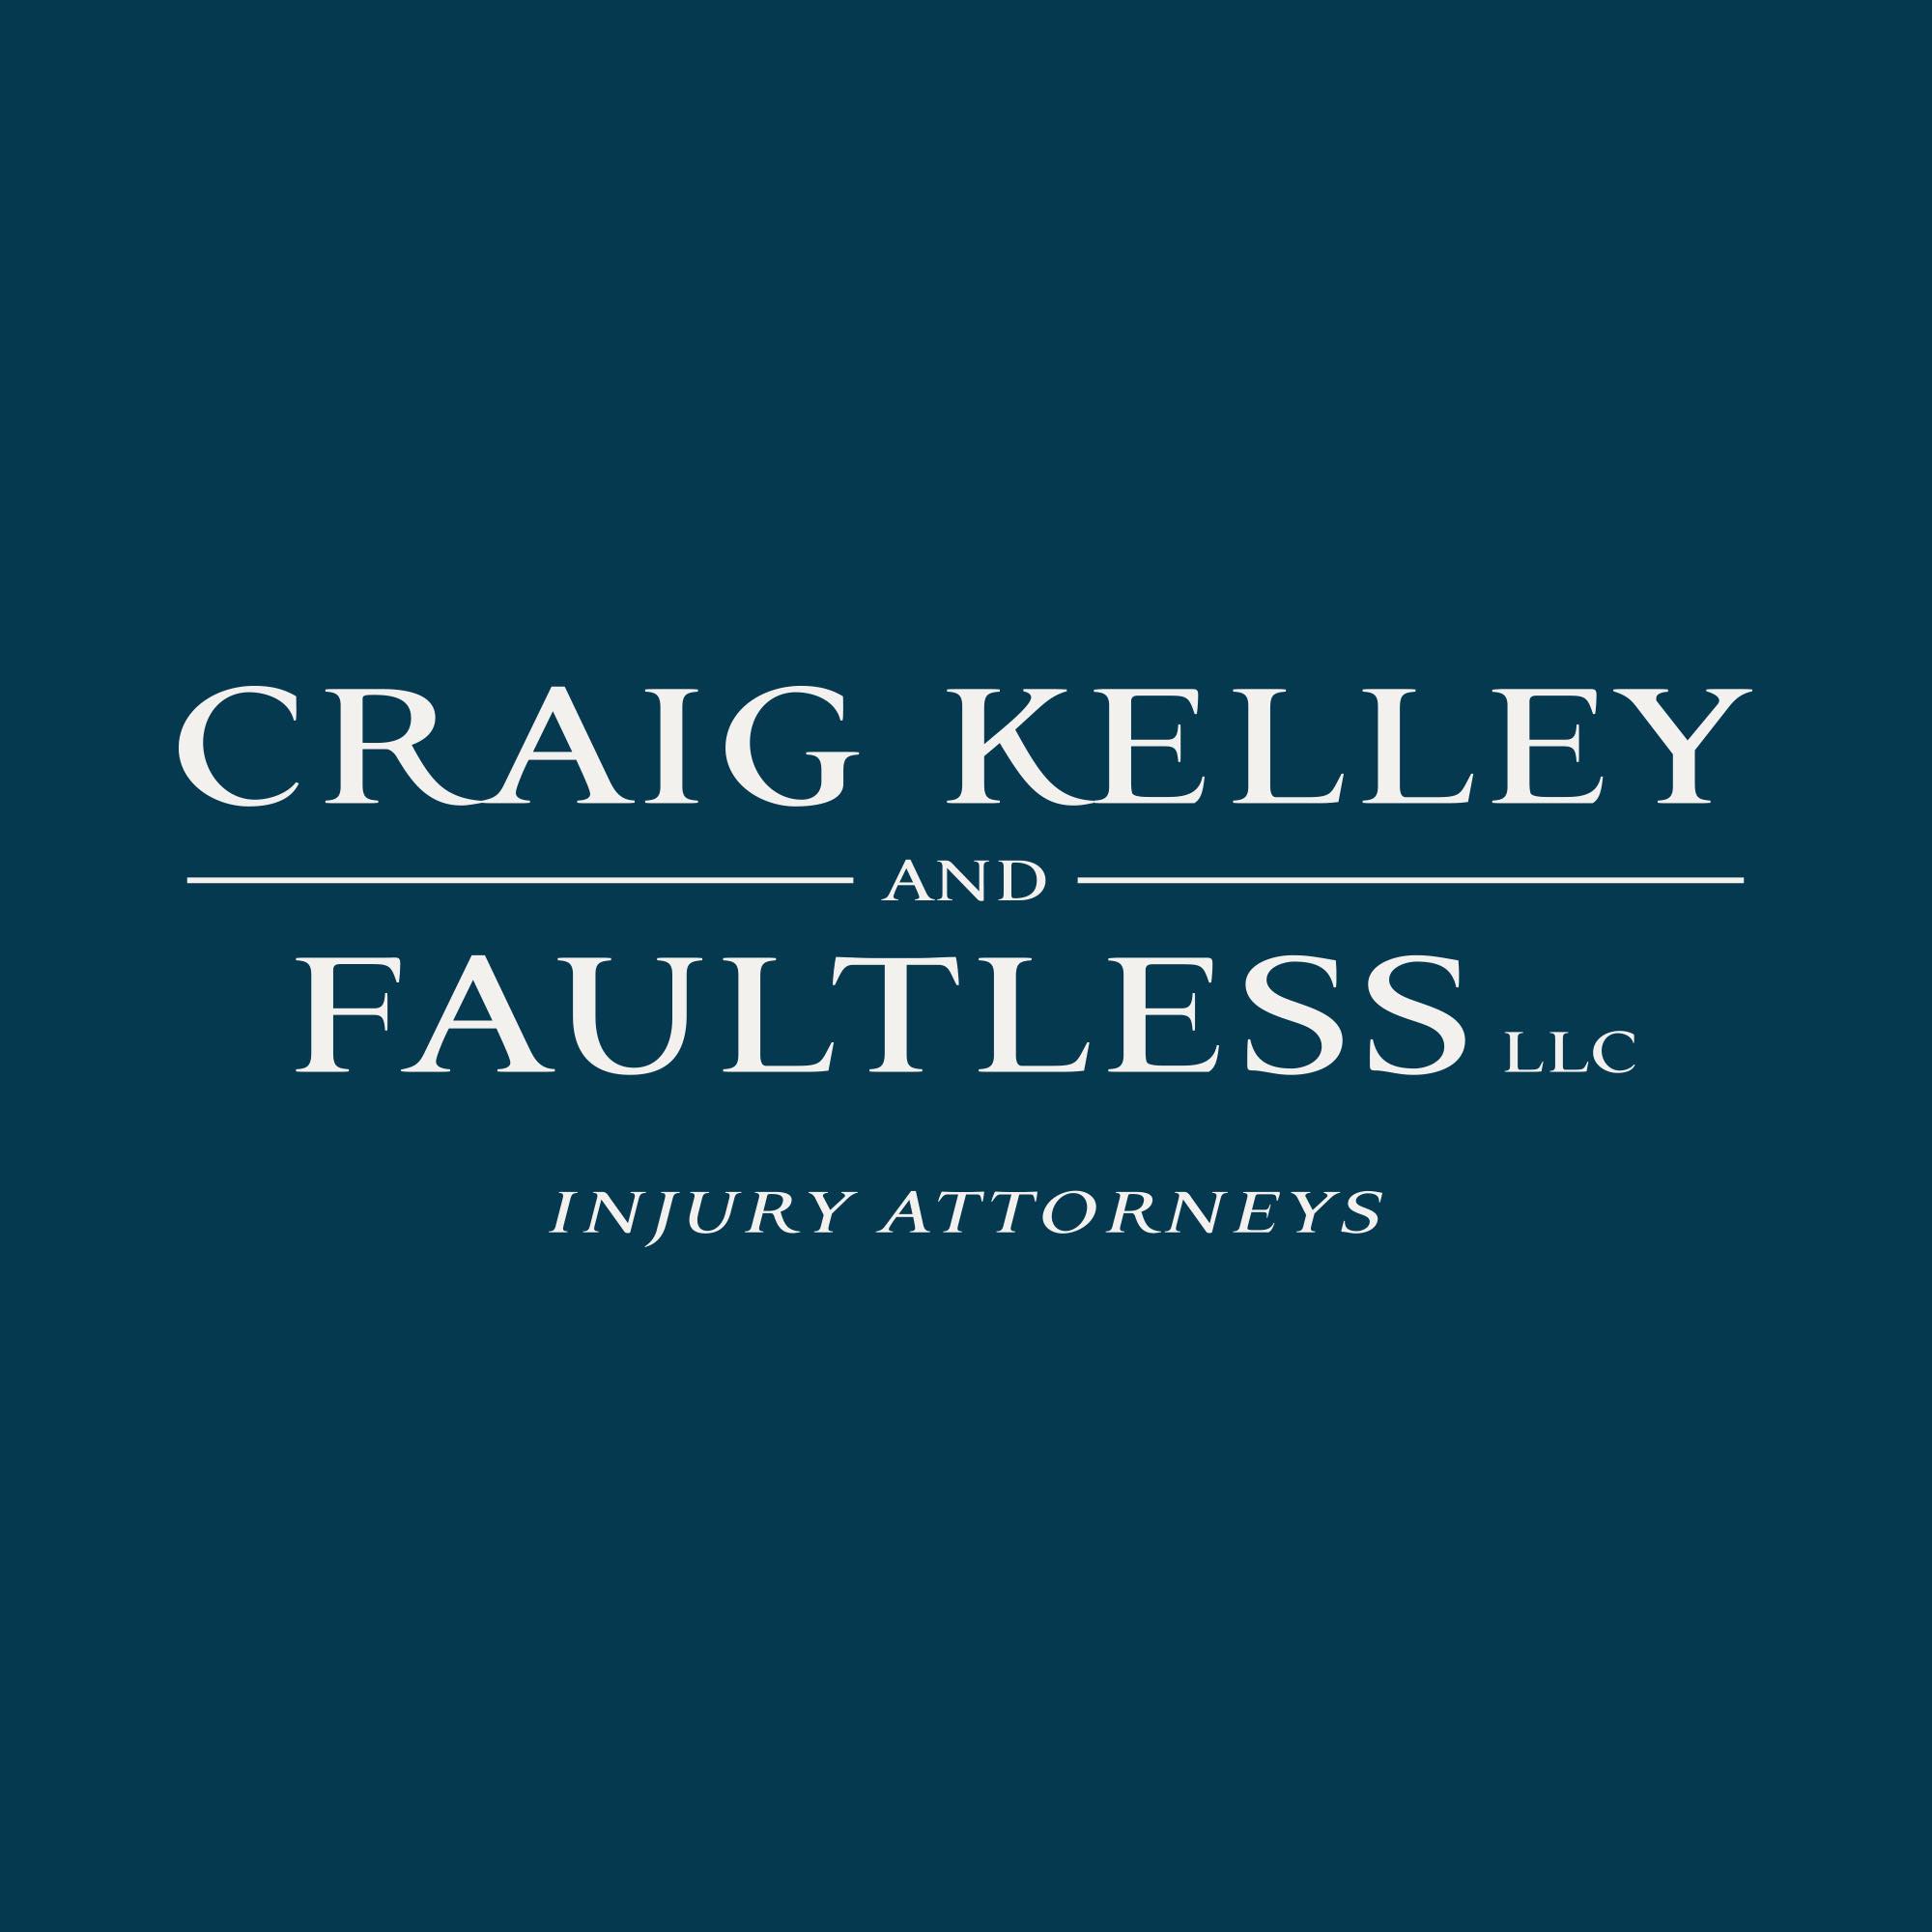 Craig Kelley and Faultless